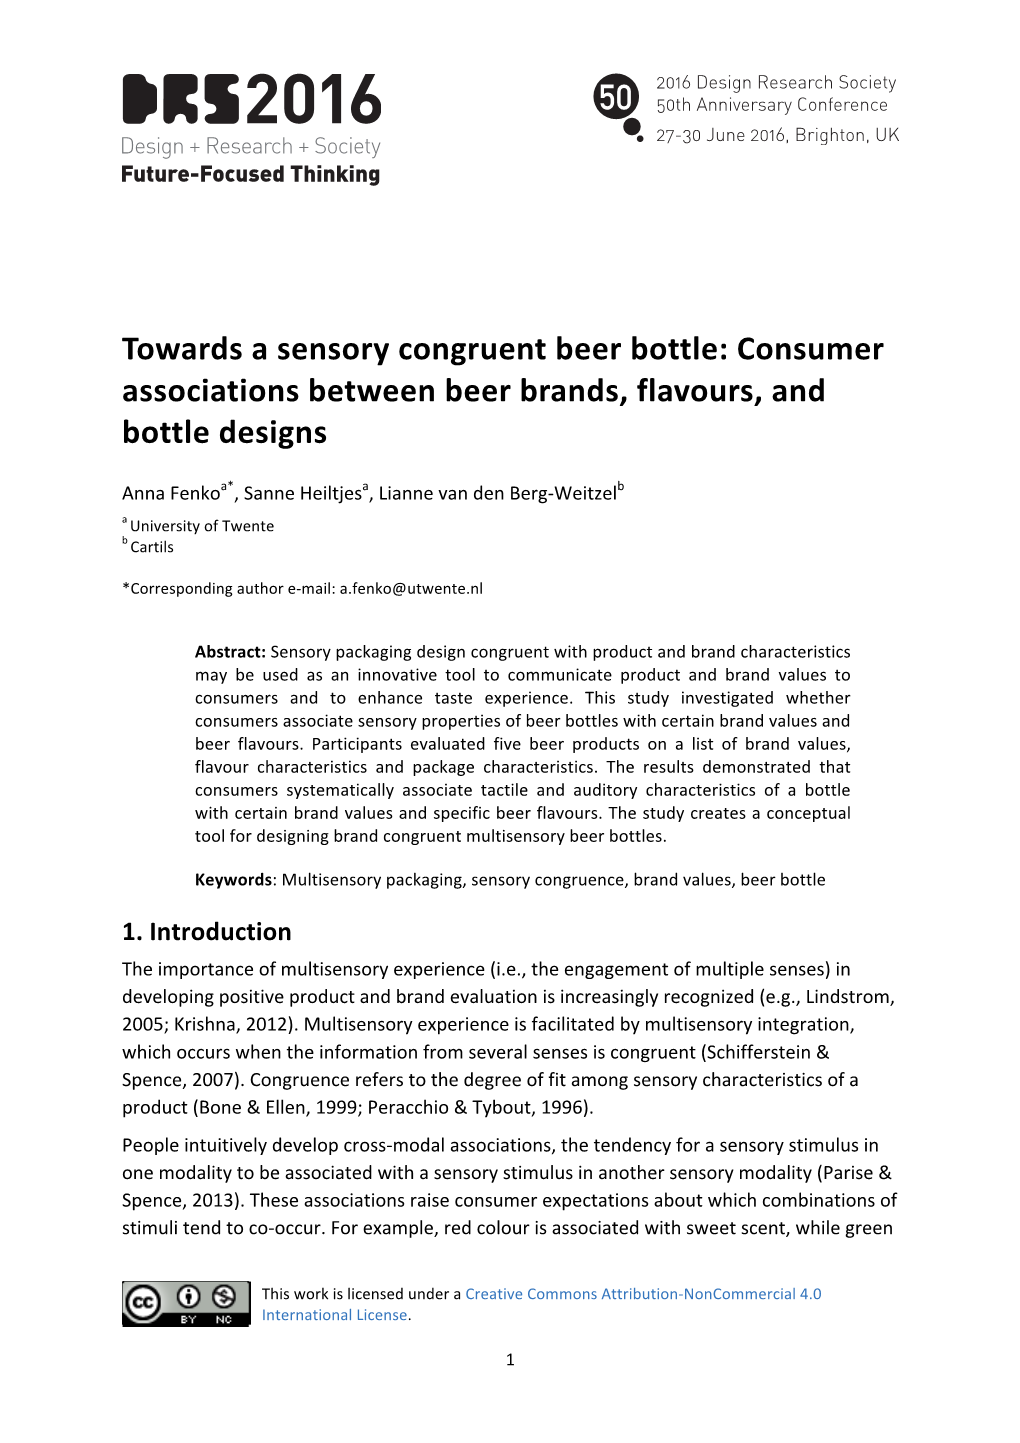 Towards a Sensory Congruent Beer Bottle: Consumer Associations Between Beer Brands, Flavours, and Bottle Designs